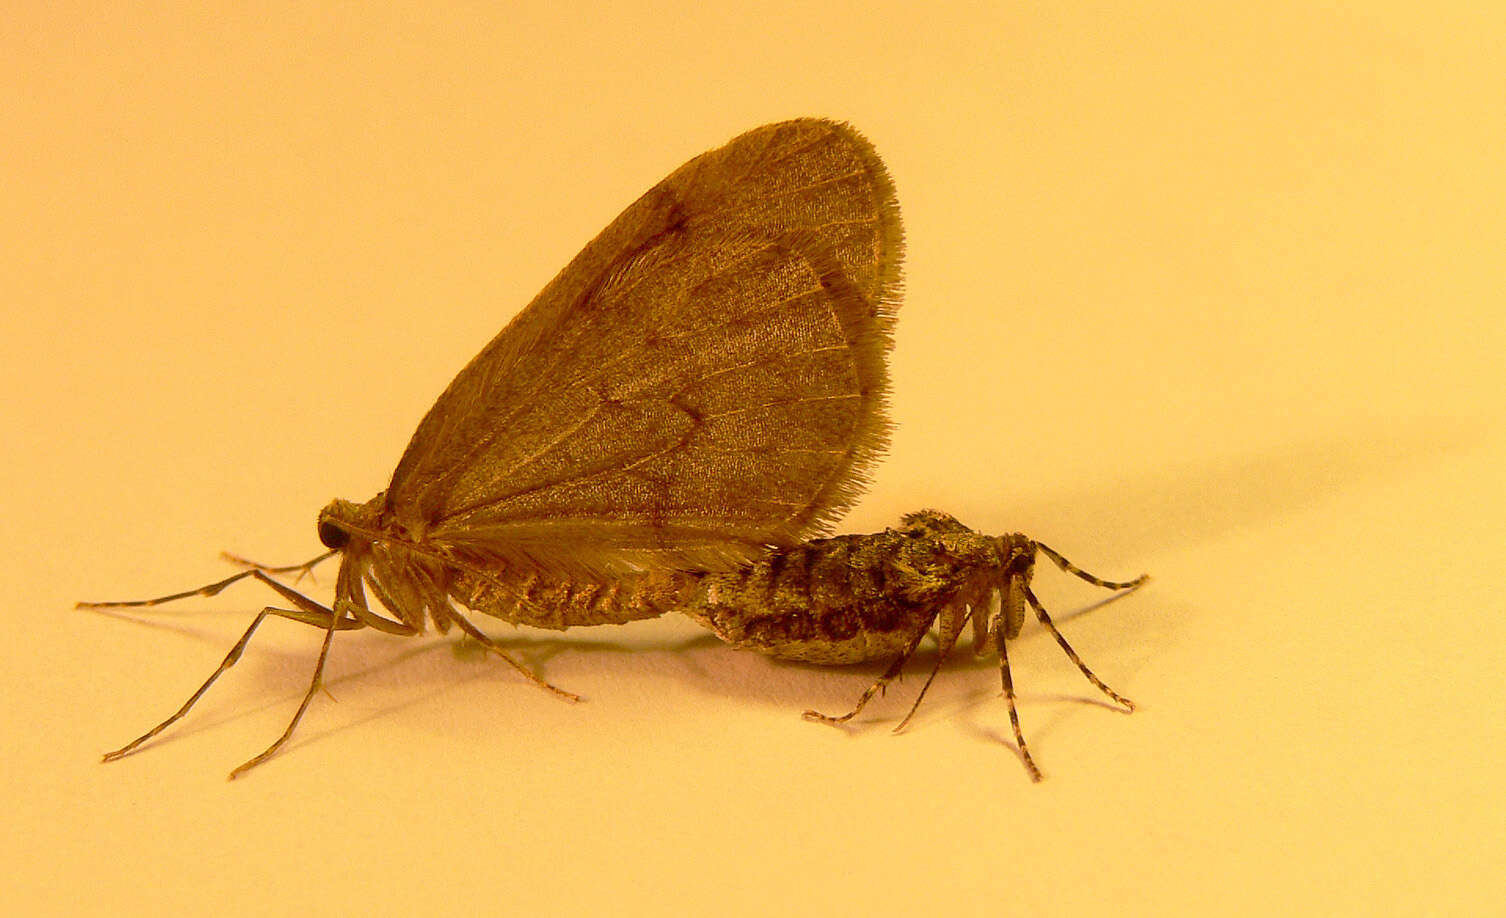 Image of winter moth